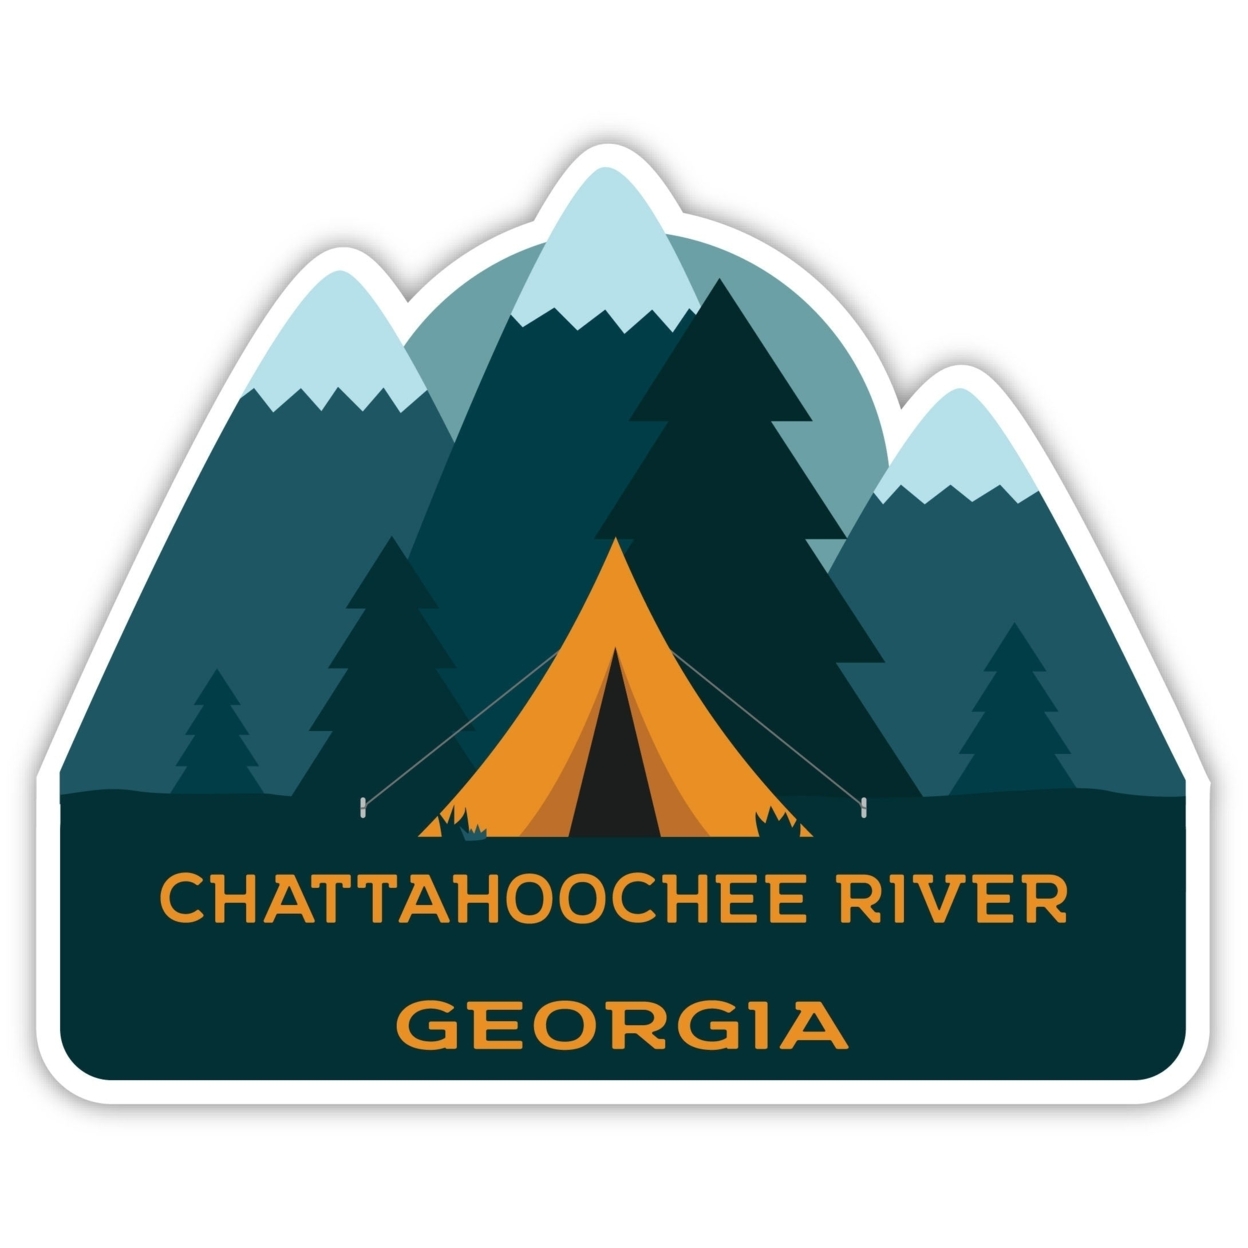 Chattahoochee River Georgia Souvenir Decorative Stickers (Choose Theme And Size) - Single Unit, 8-Inch, Tent